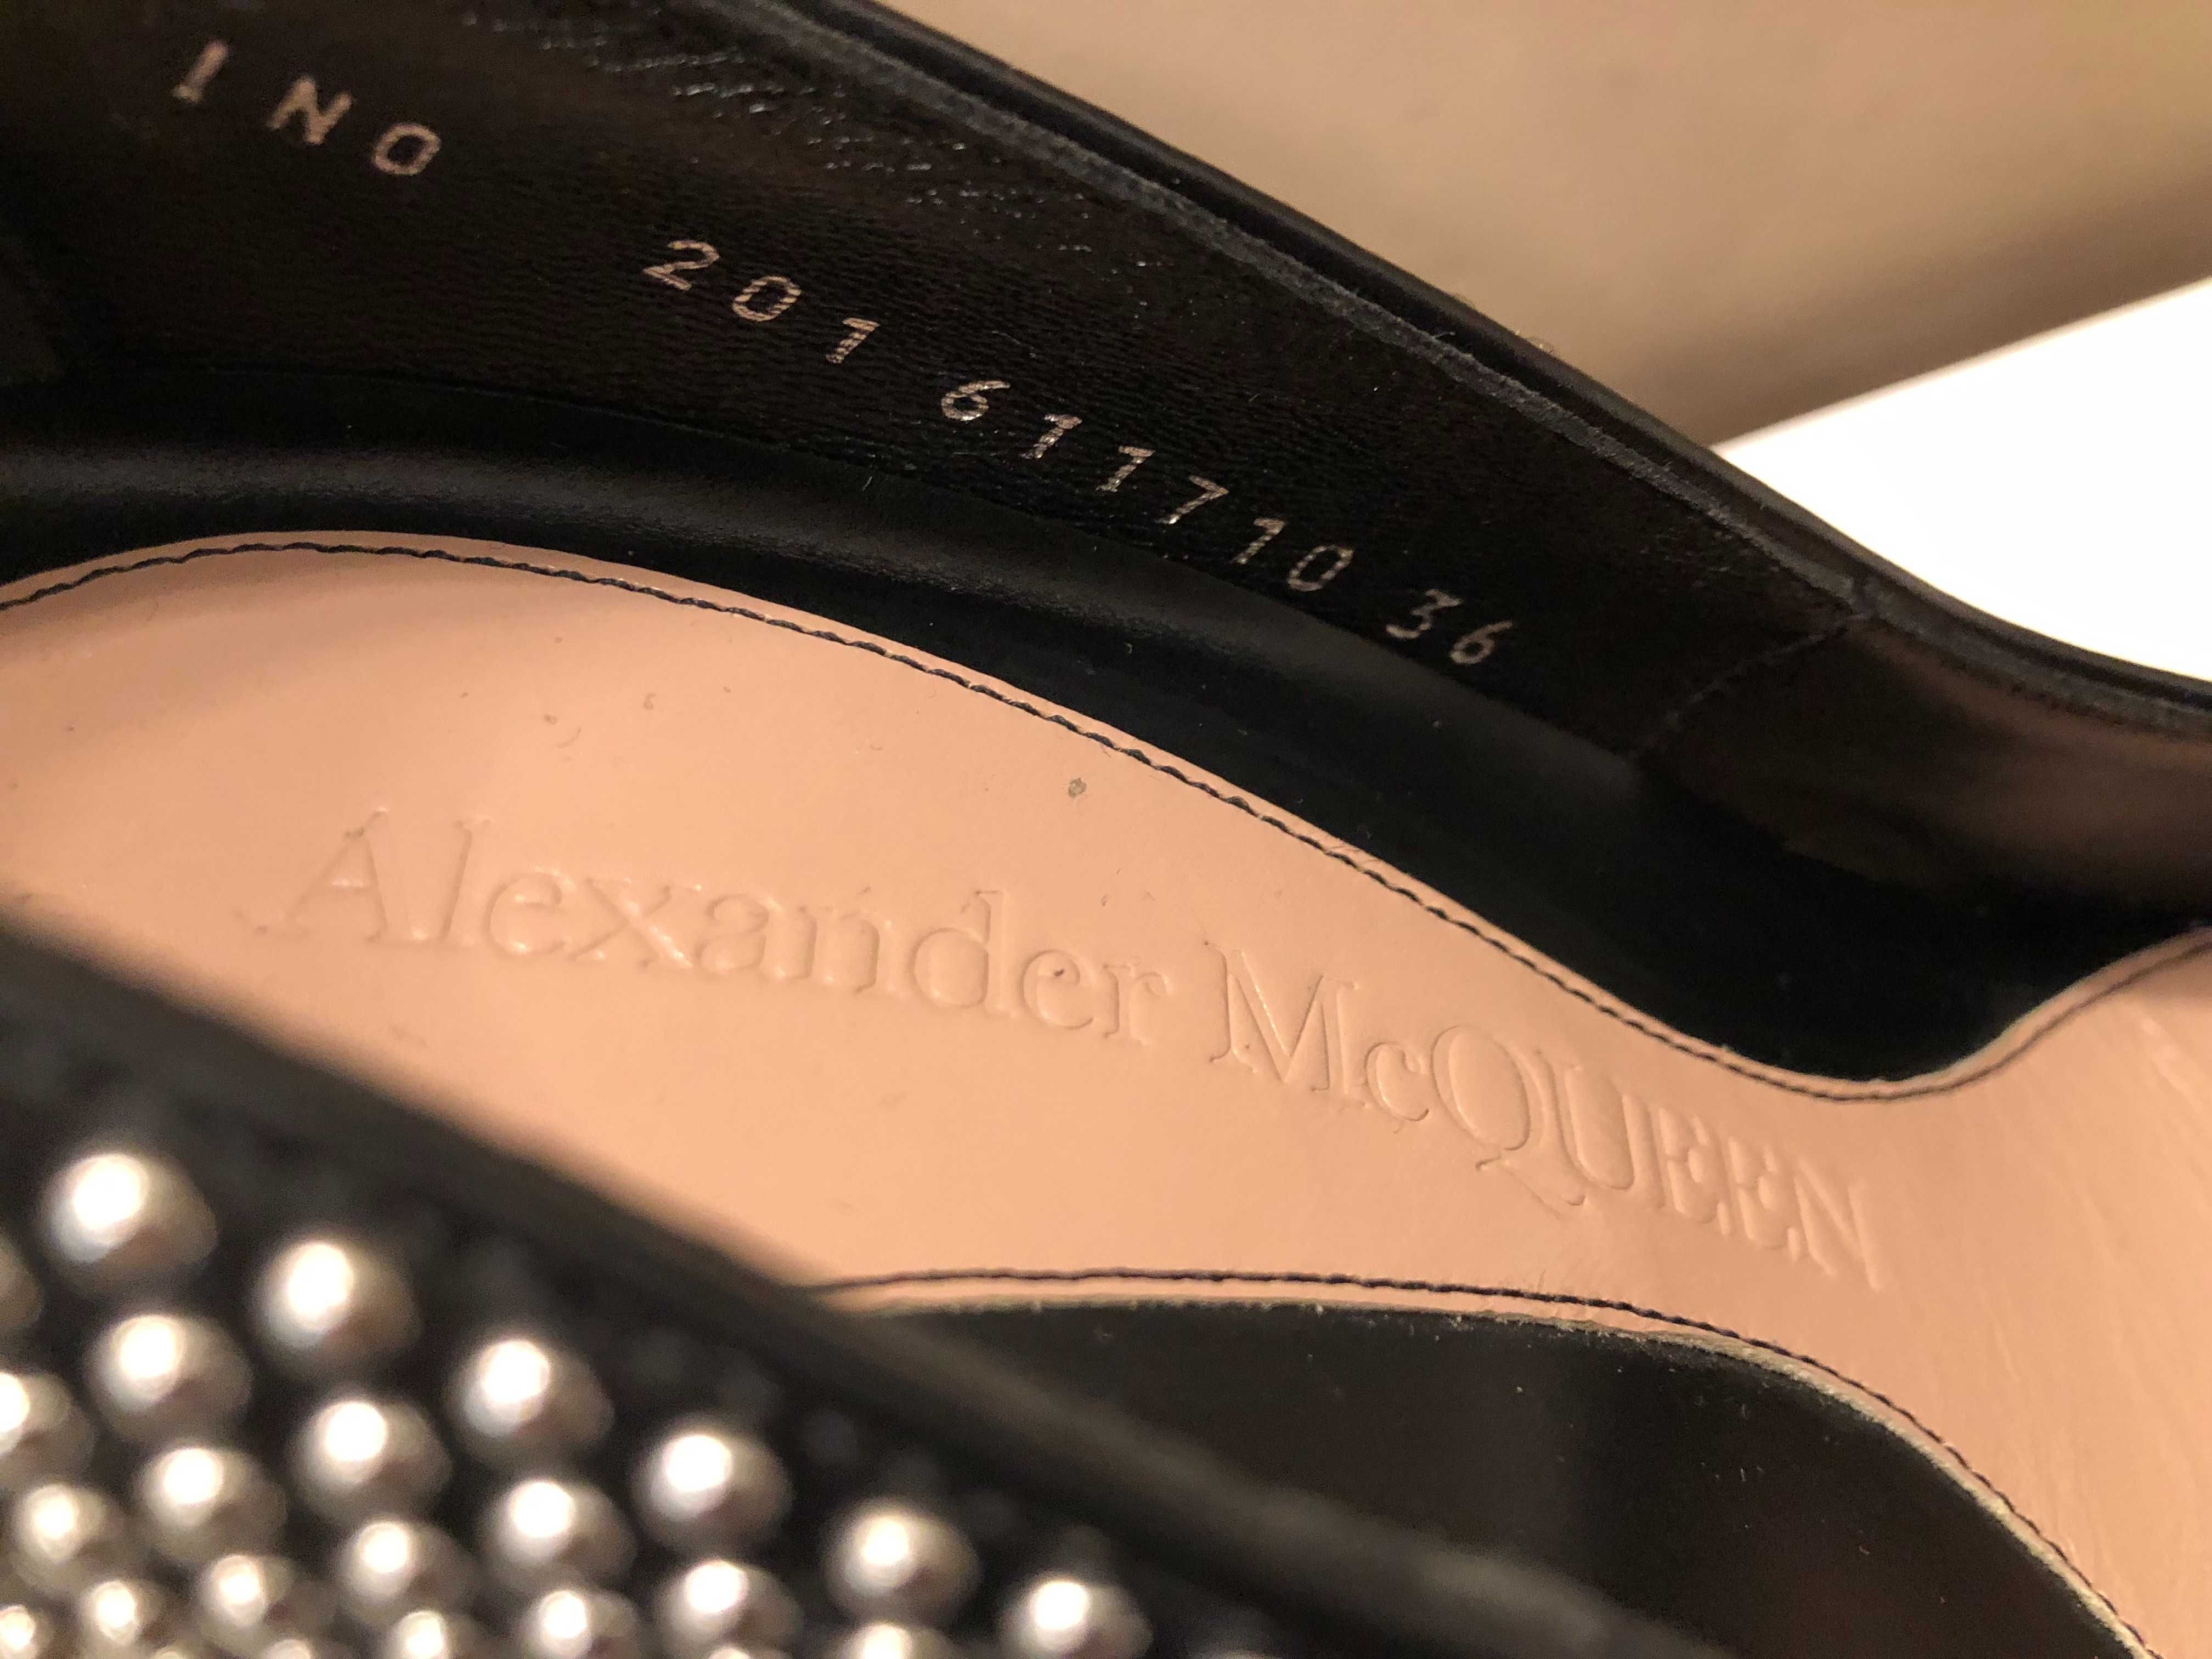 Alexander McQueen pantofi dama 36-37, full box, retail 790 euro